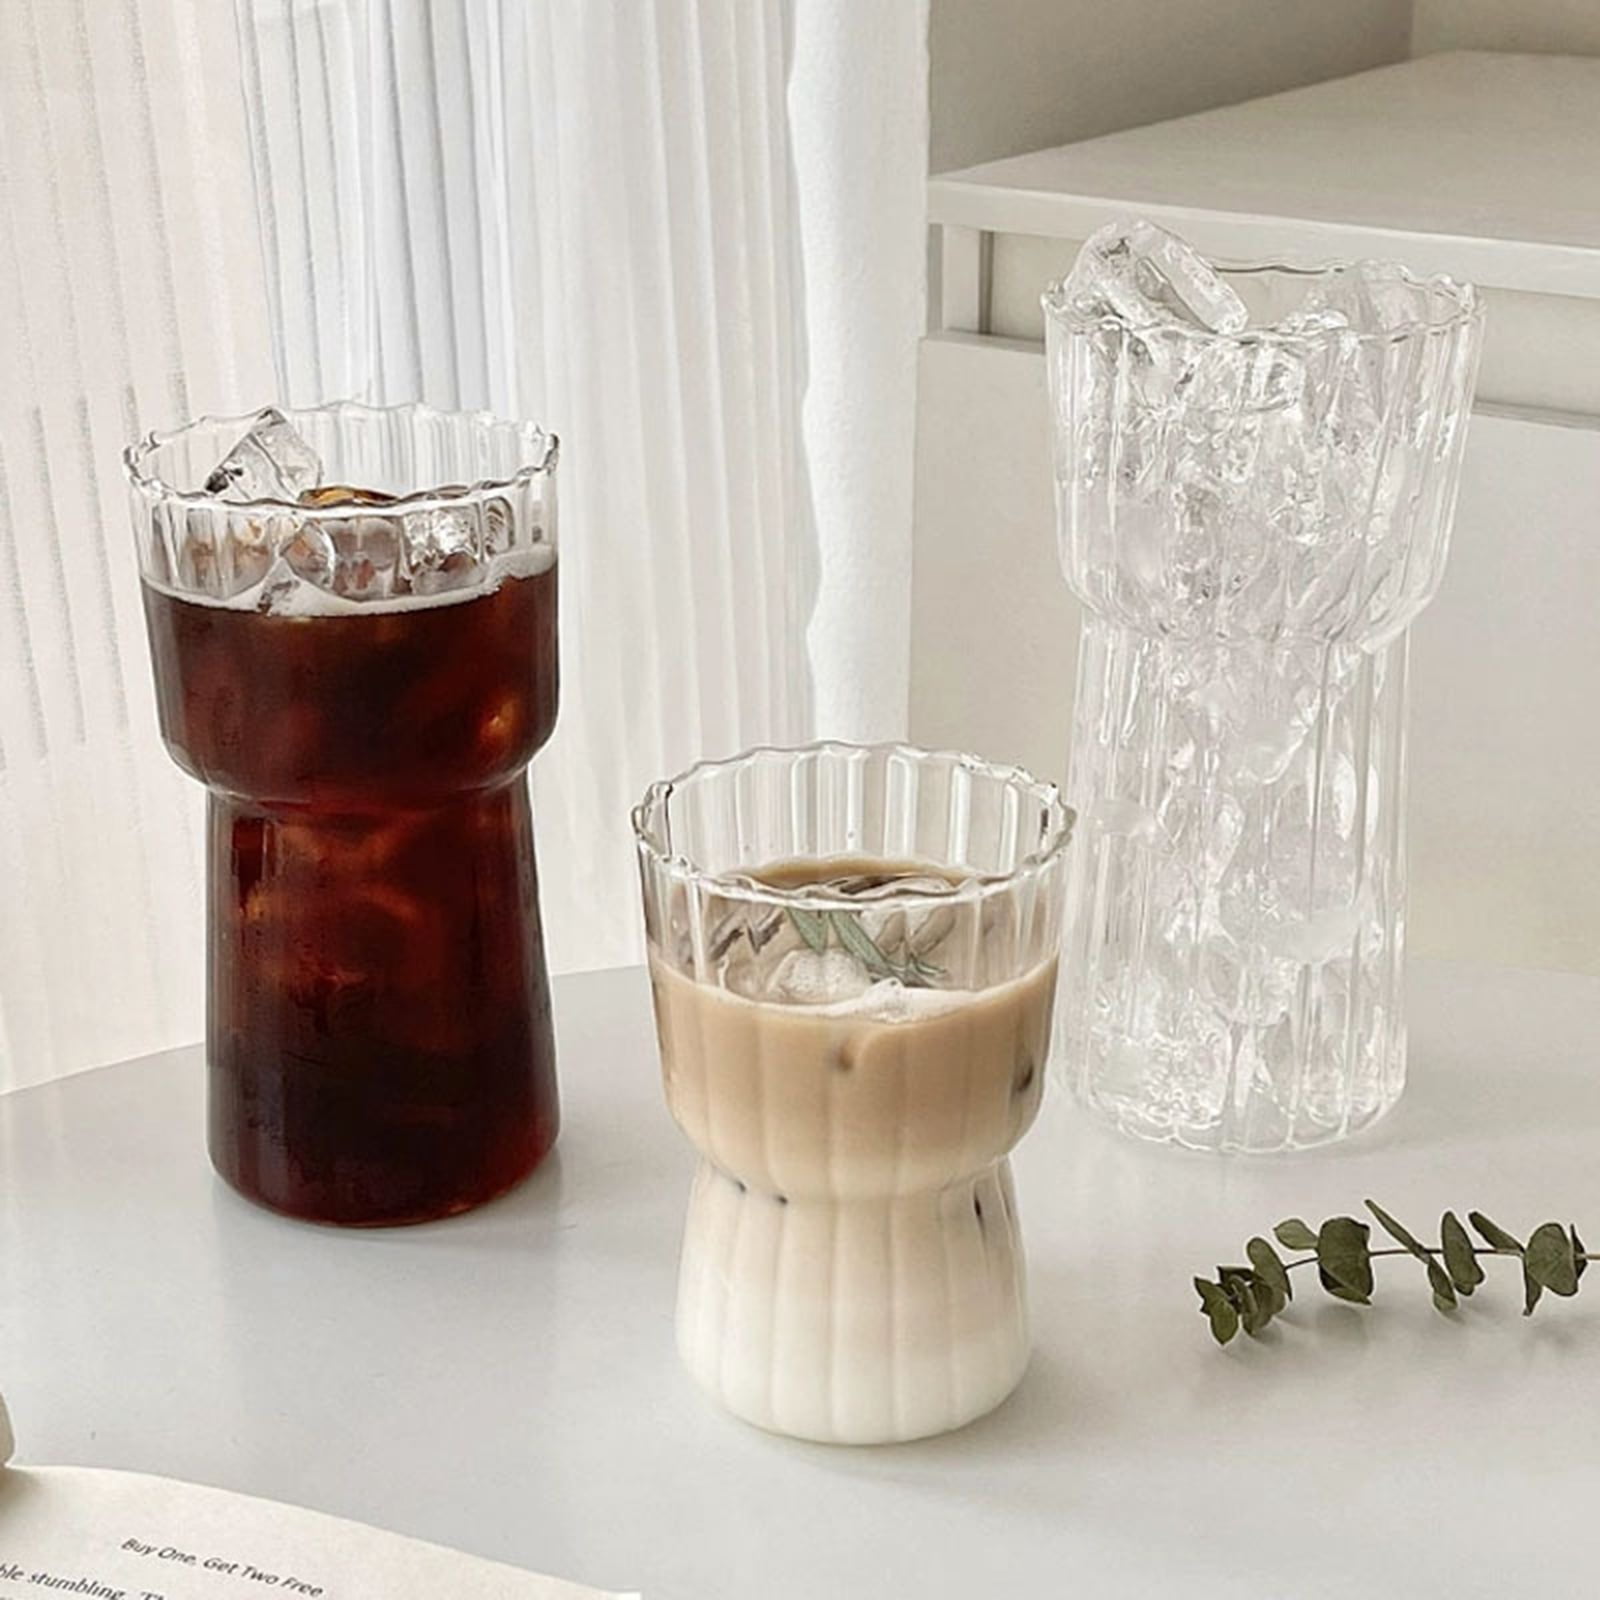 URMAGIC Ribbed Glassware,1 Pcs 25 Oz Vintage Drinking Glasses,Vertical  Stripes Beverage Glasses,Crea…See more URMAGIC Ribbed Glassware,1 Pcs 25 Oz